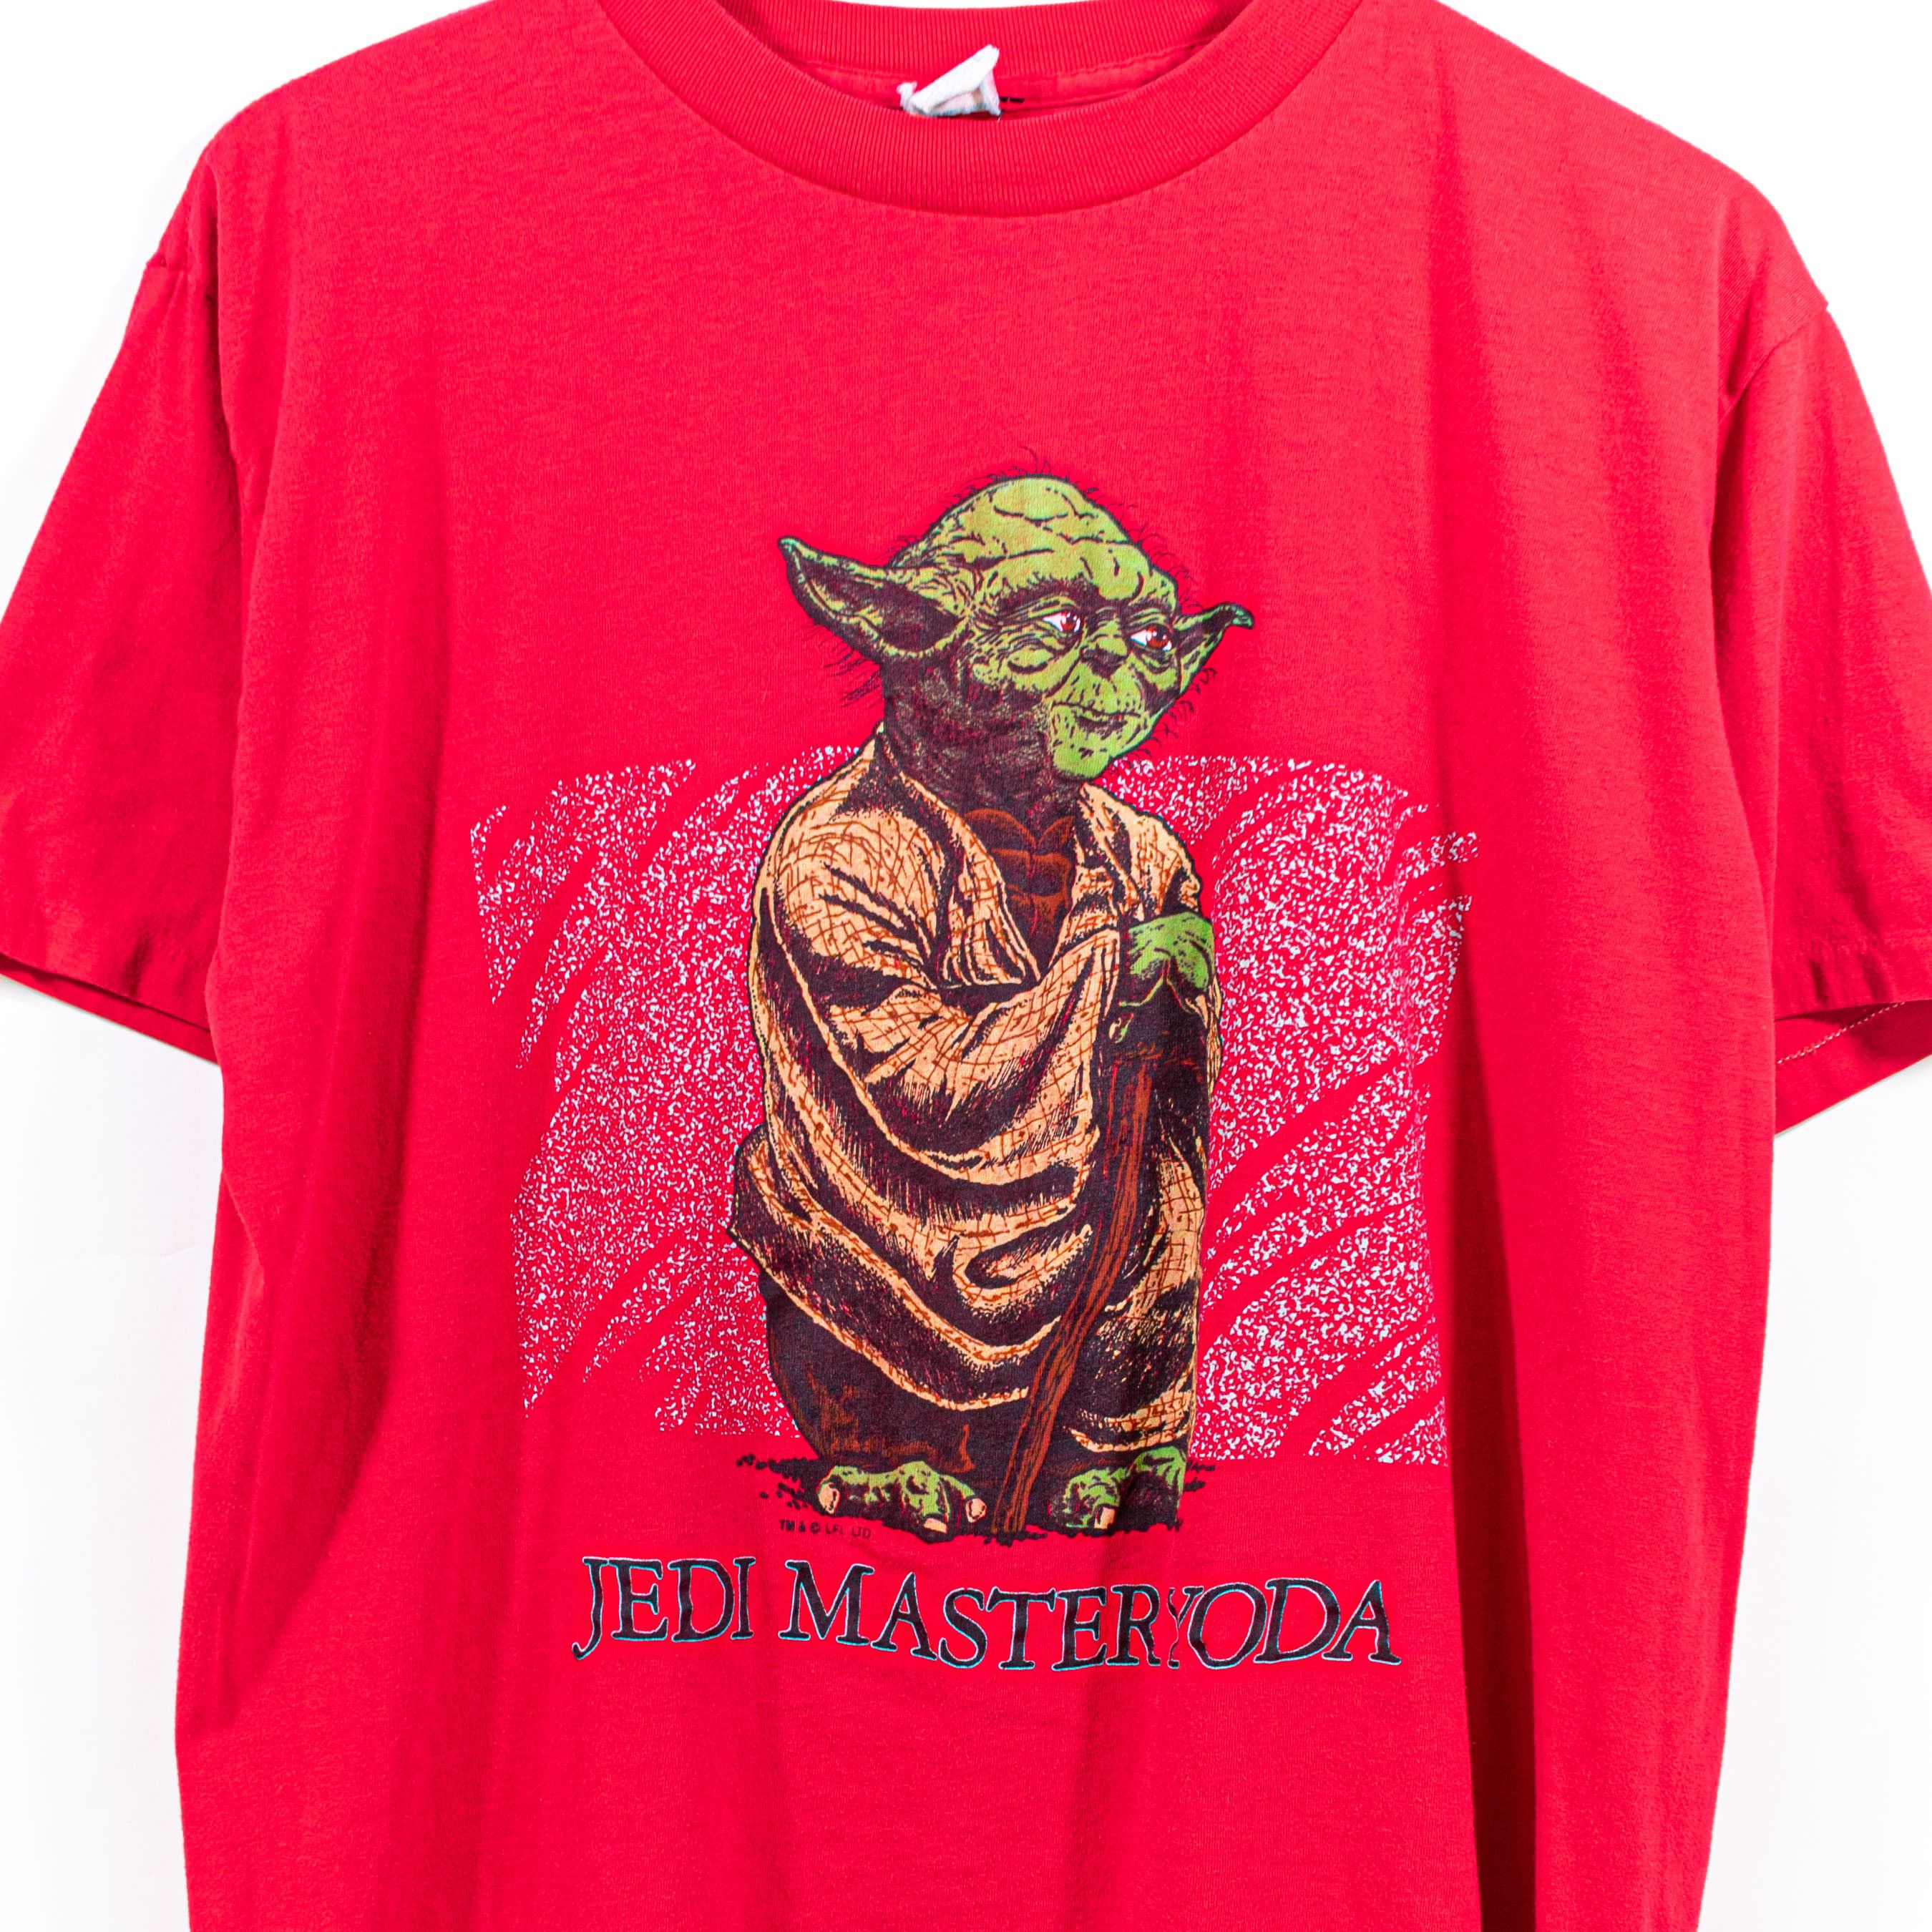 Vintage Star Wars Jedi Master Yoda T-Shirt VTG Artex George Lucas Size US L / EU 52-54 / 3 - 3 Thumbnail